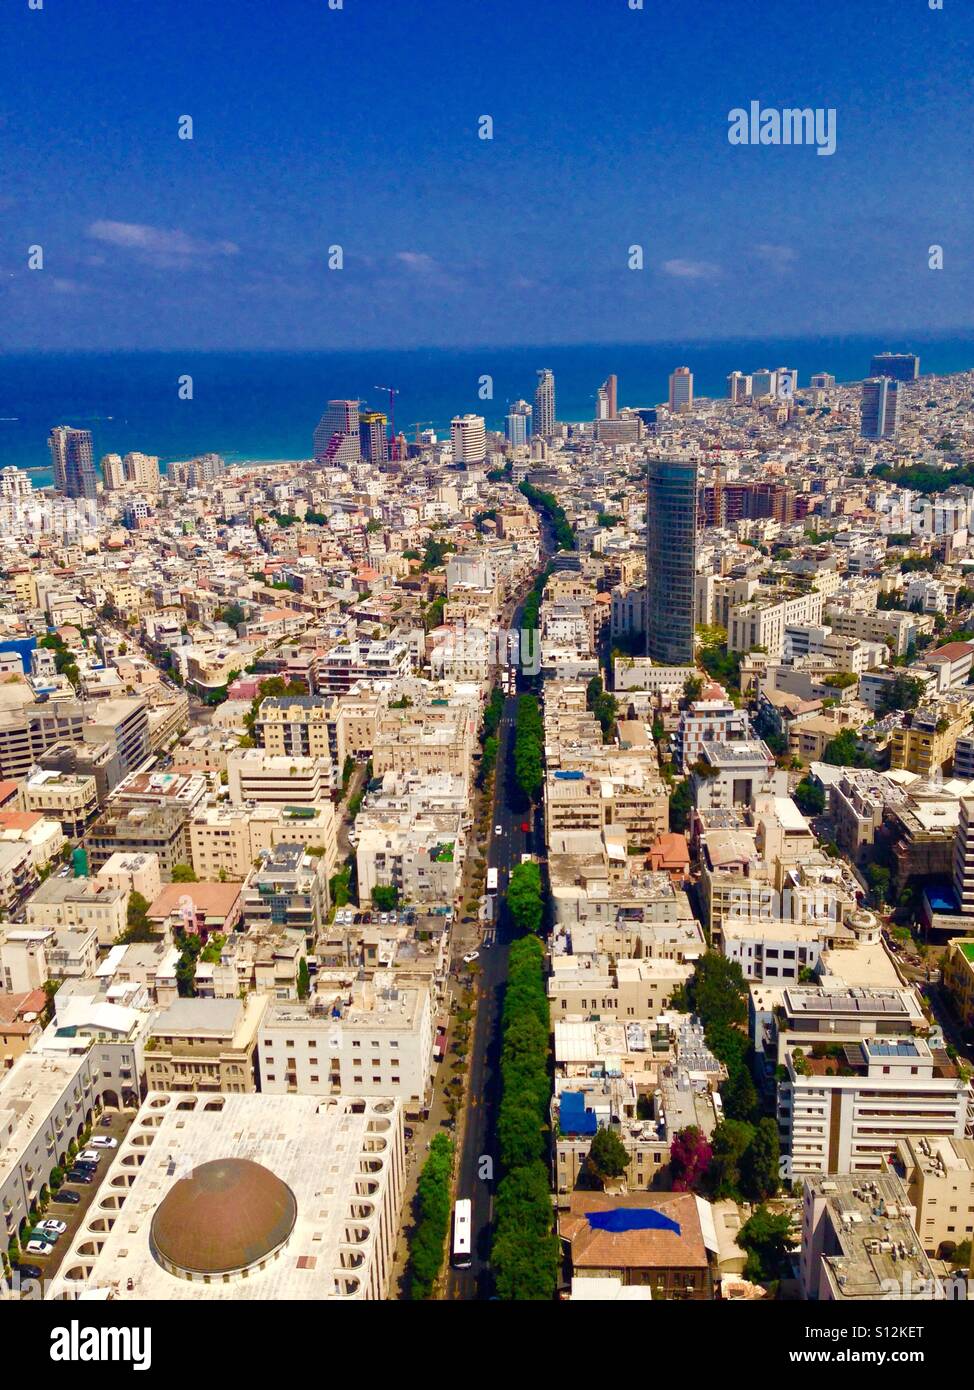 Vista aerea di Allenby street a Tel Aviv, Israele. Foto Stock